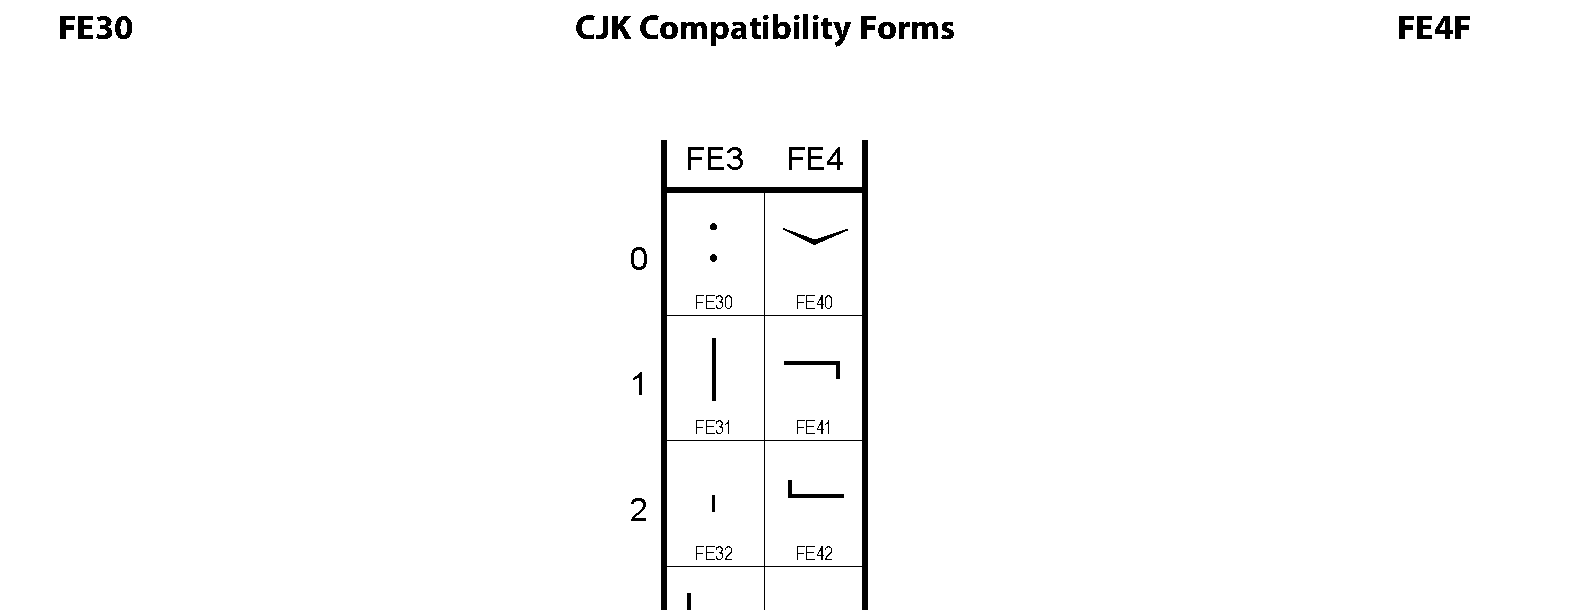 Unicode - CJK Compatibility Forms